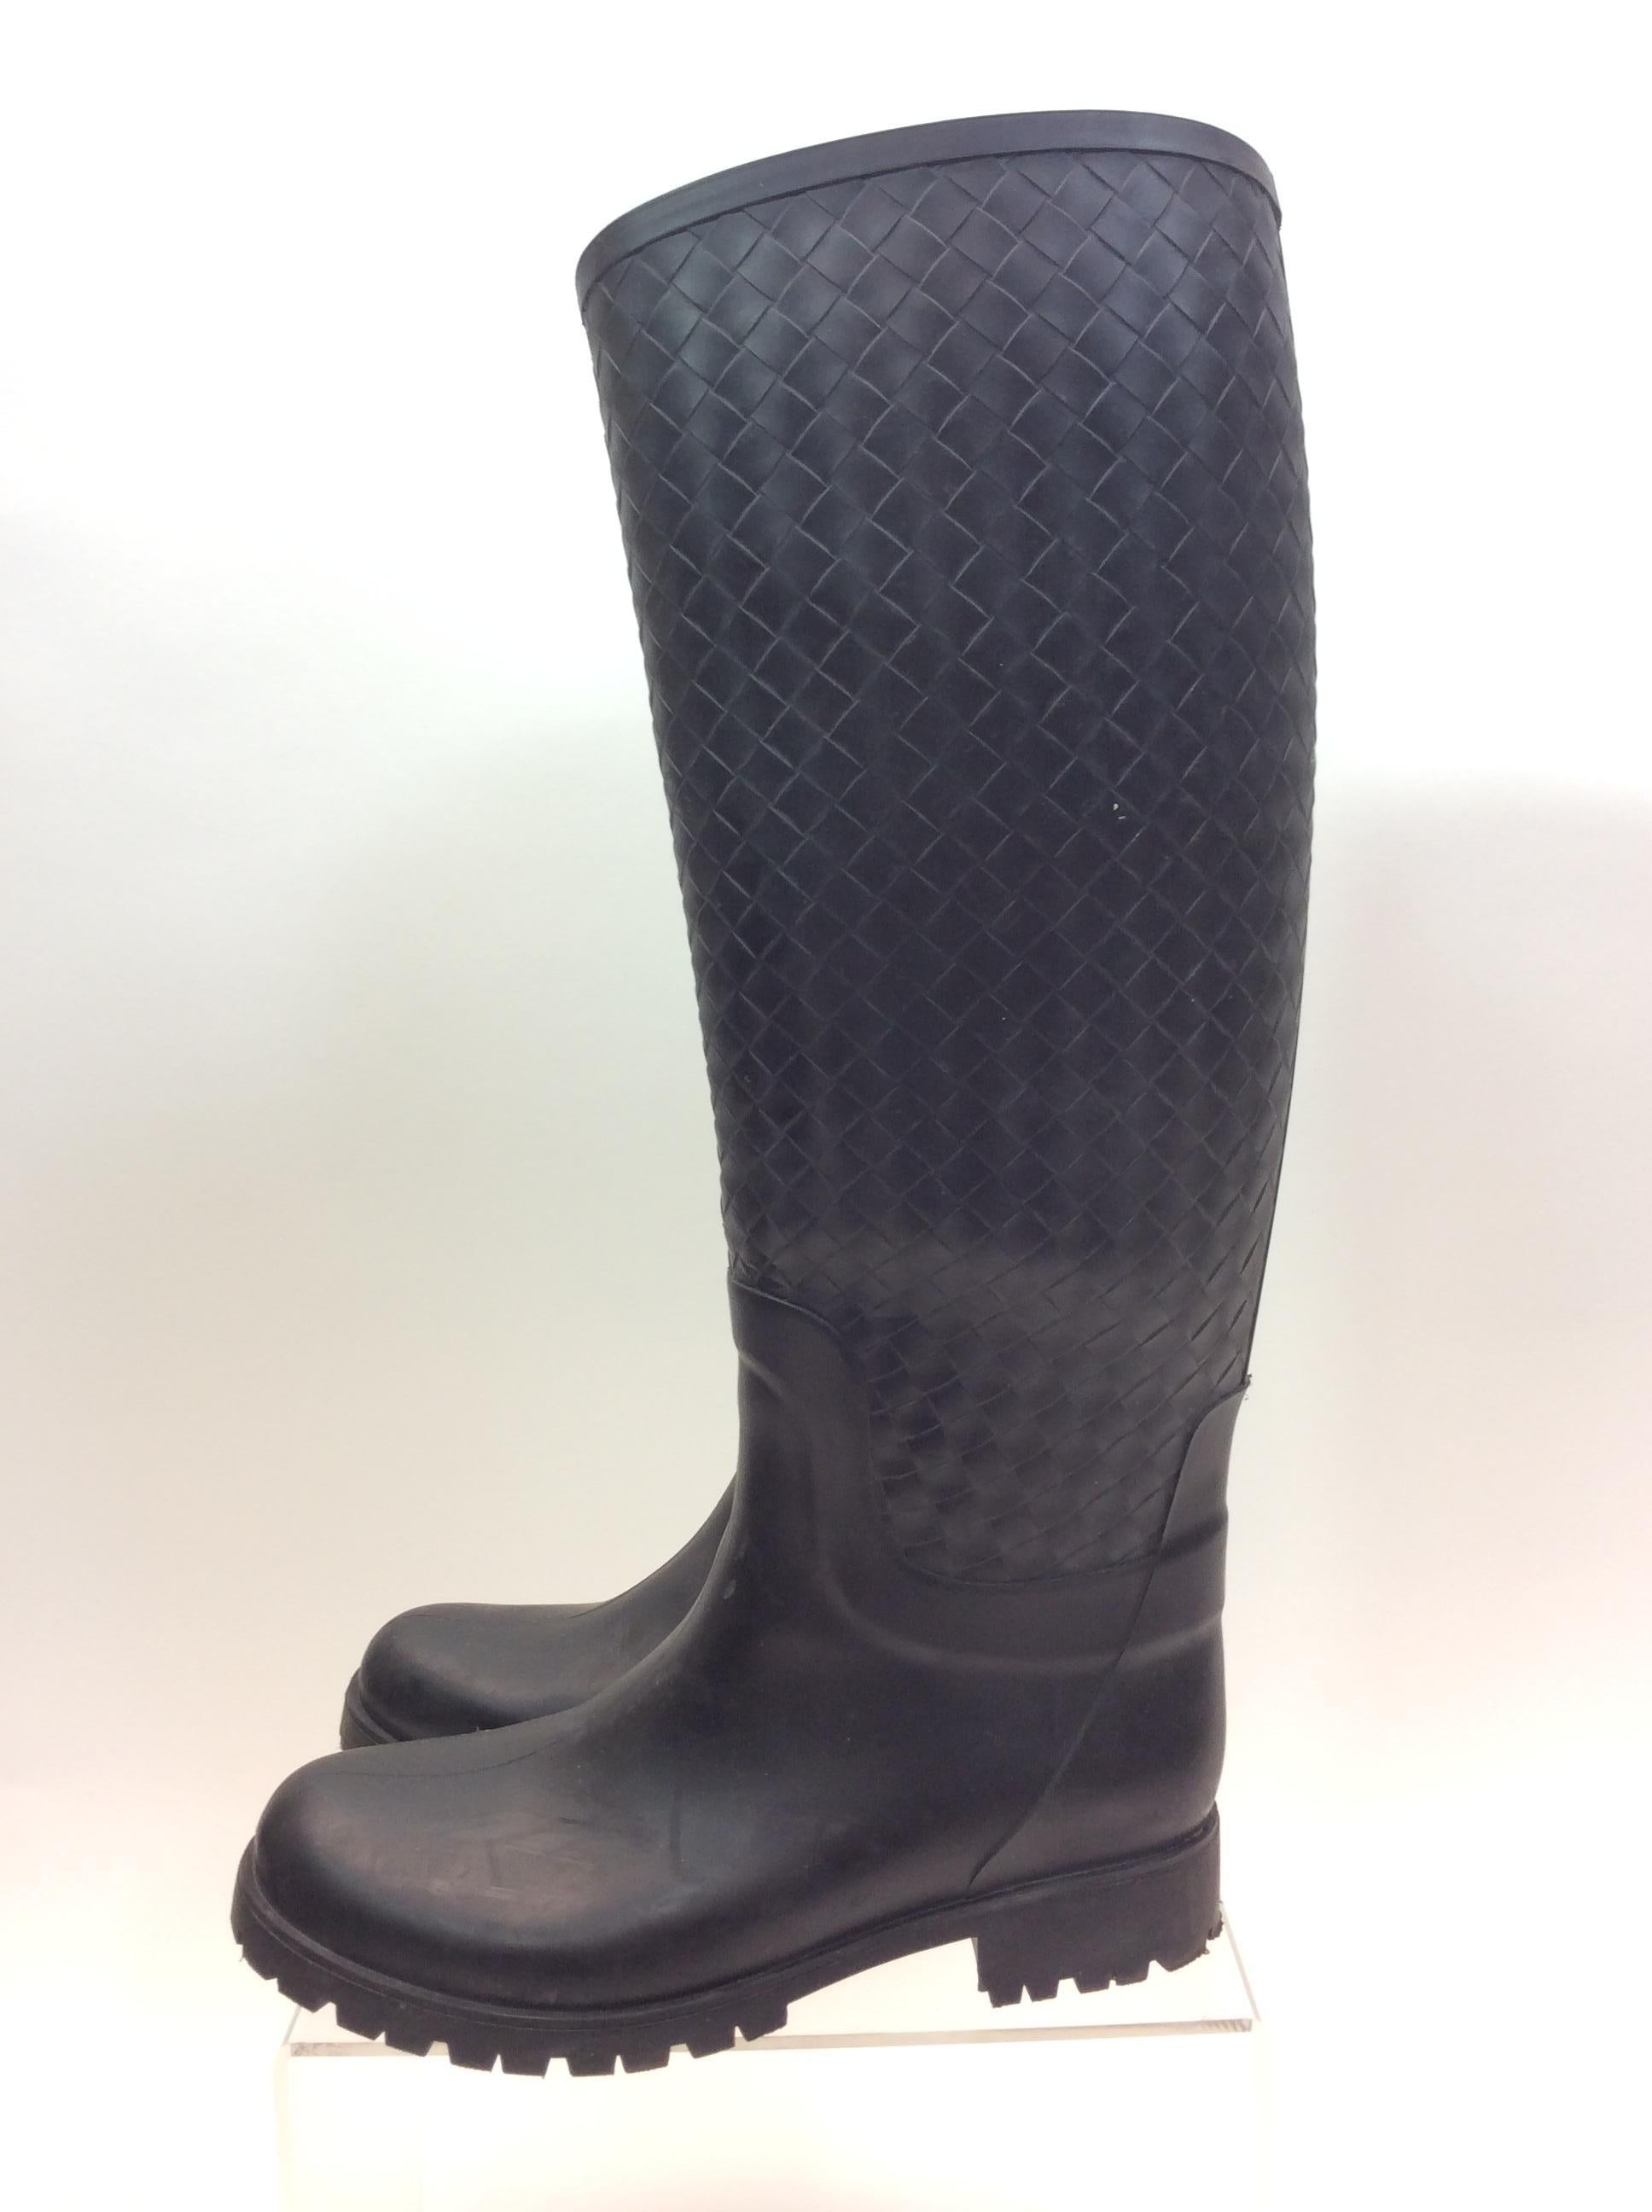 Bottega Veneta Black Rain Boots 
$199
Made in Italy
Size 40